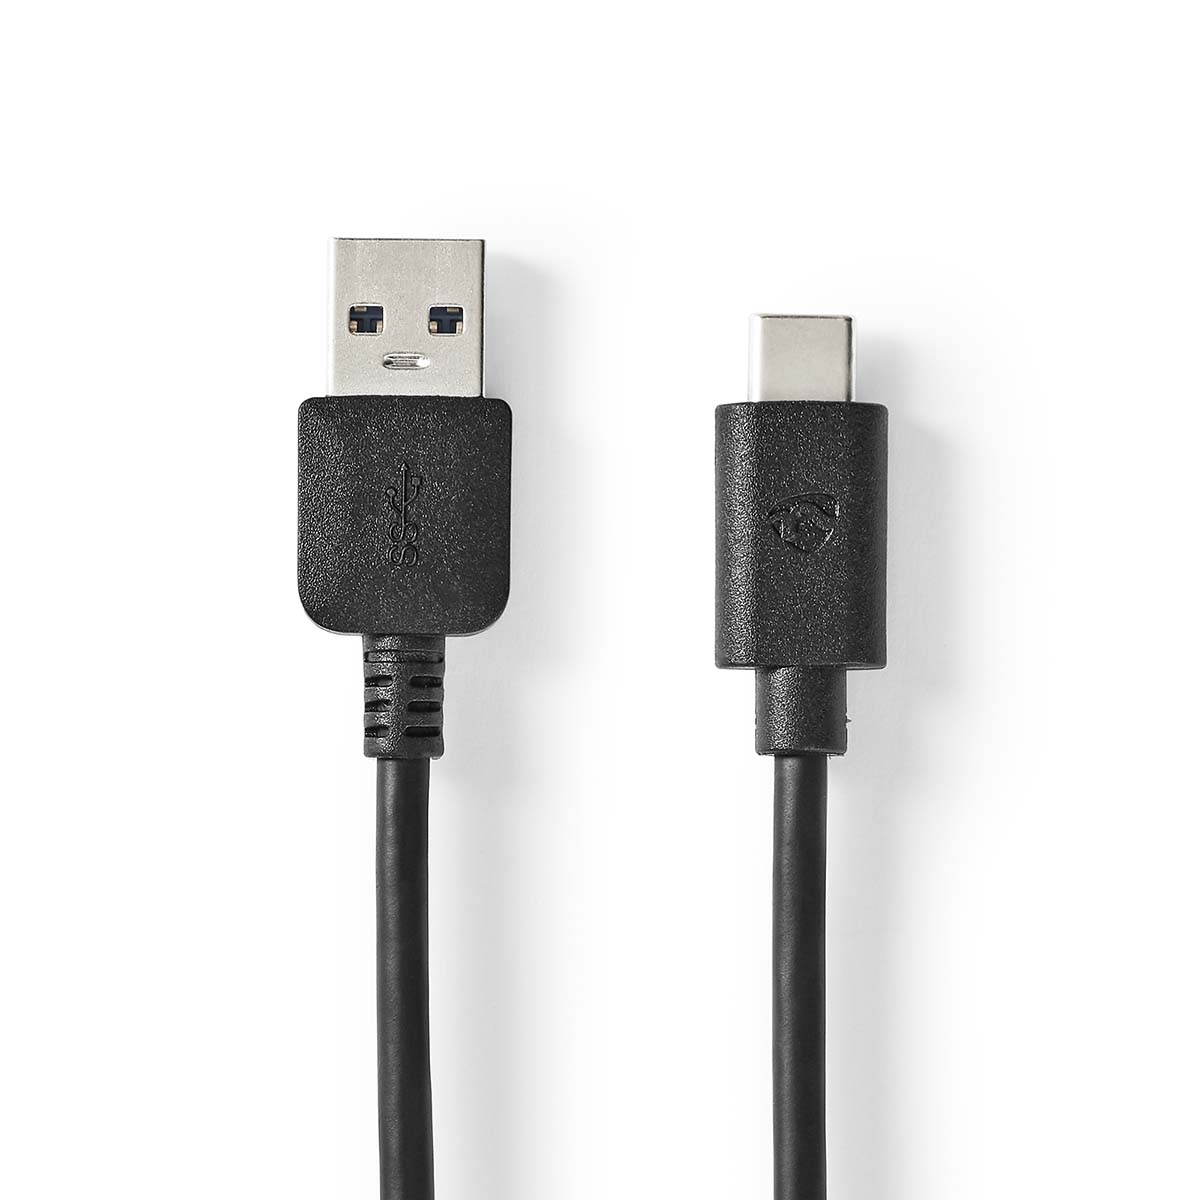 NEDIS CCGW61600BK20 USB-Kabel